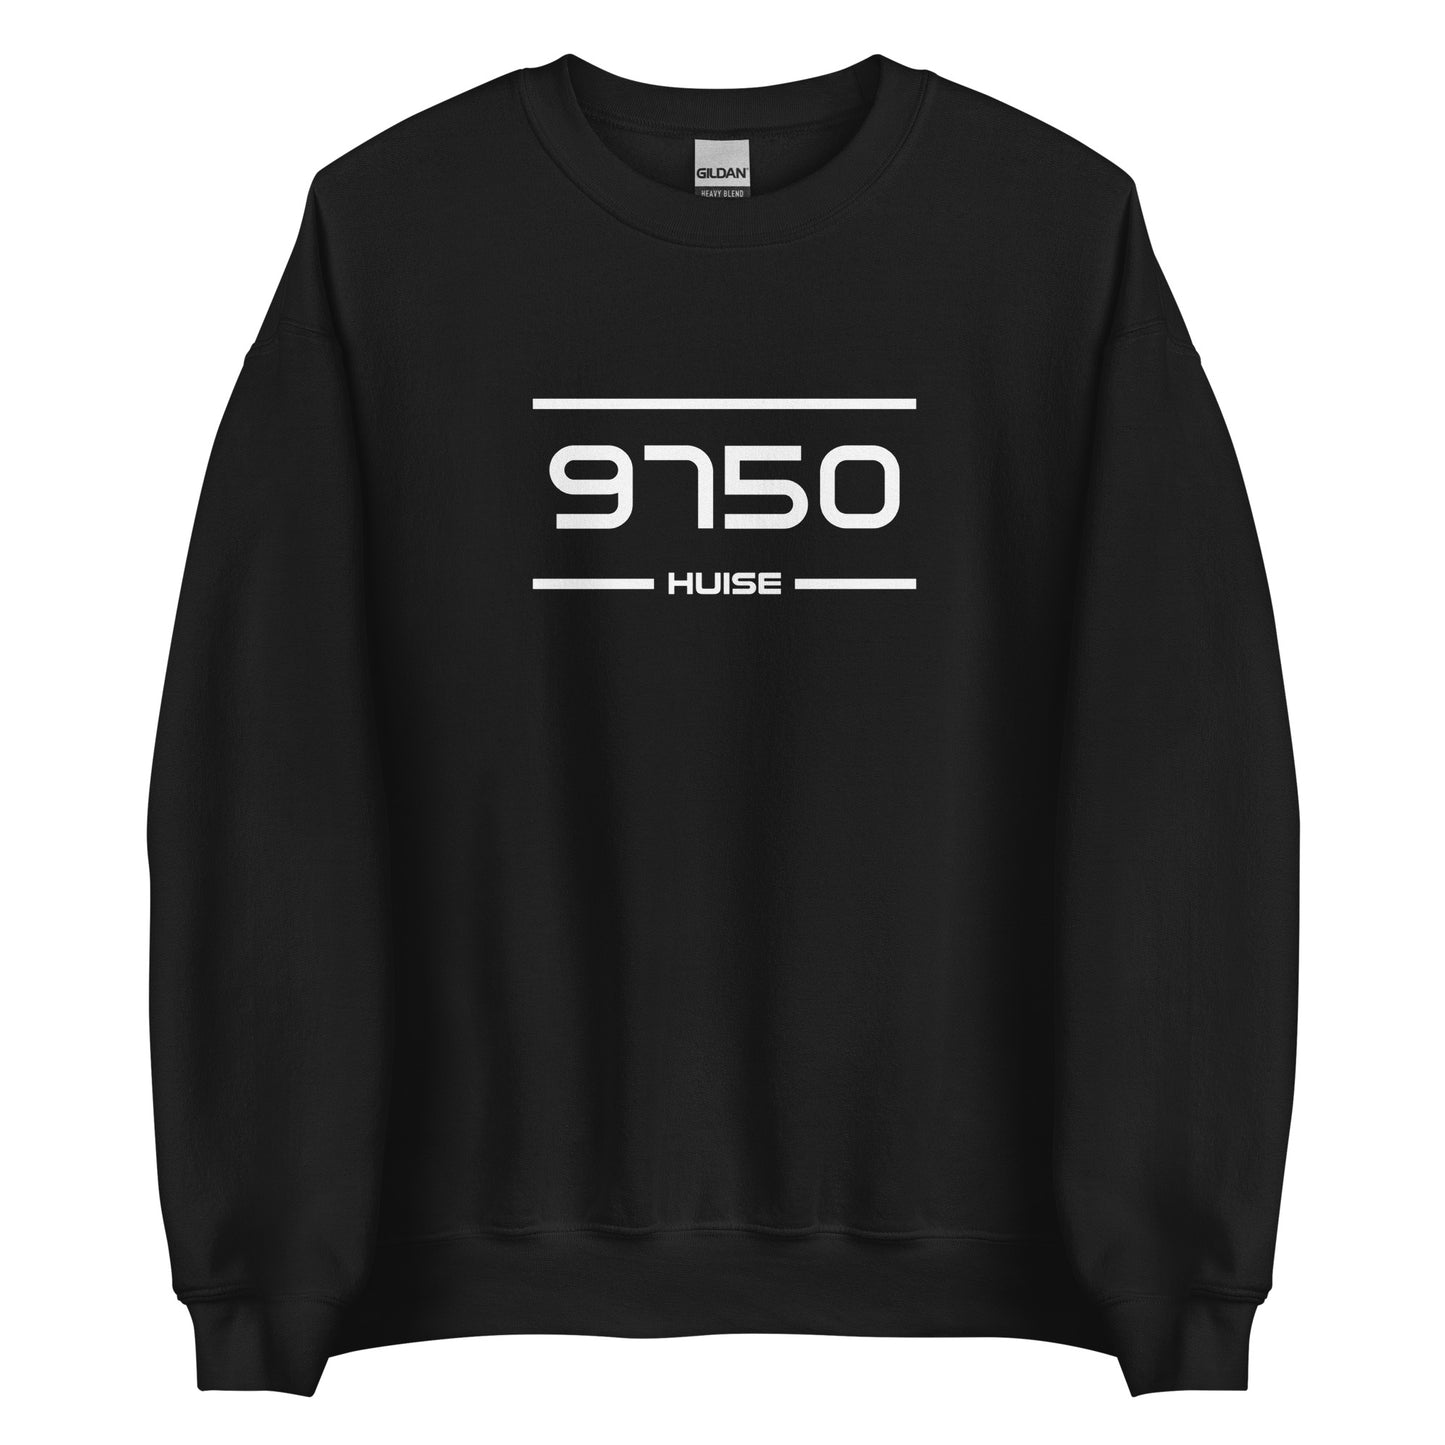 Sweater - 9750 - Huise (M/V)